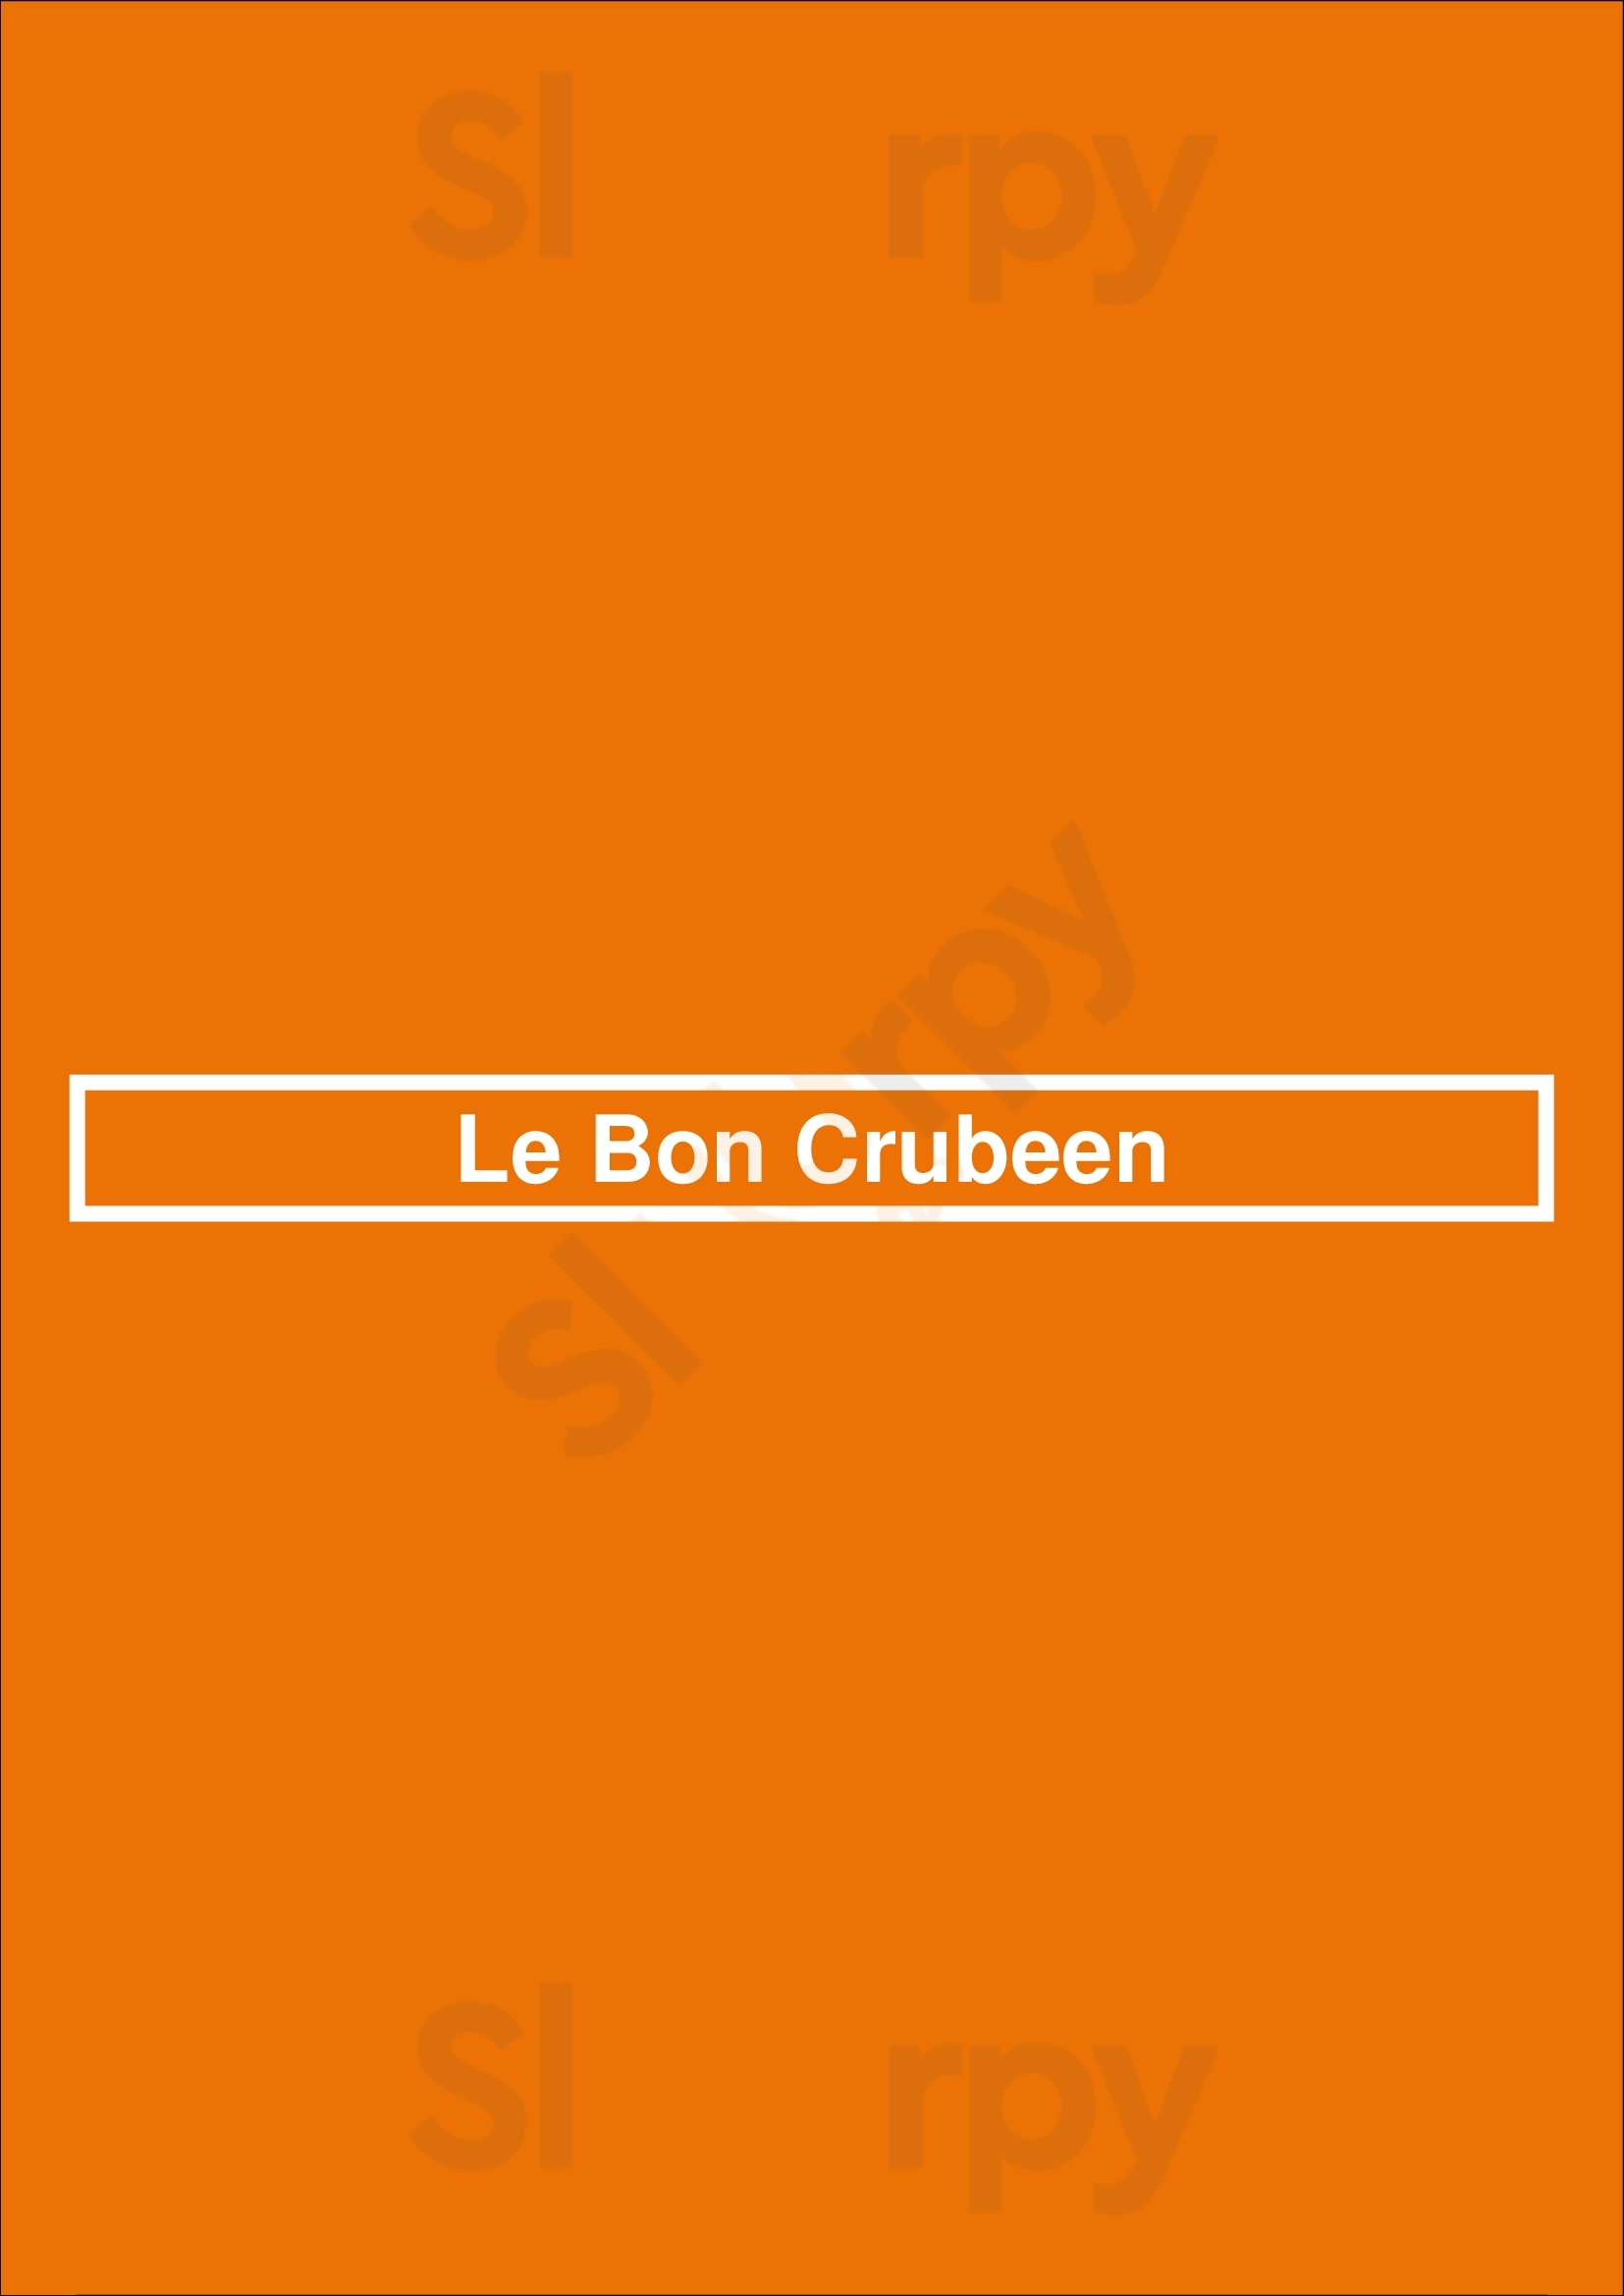 Le Bon Crubeen Dublin Menu - 1